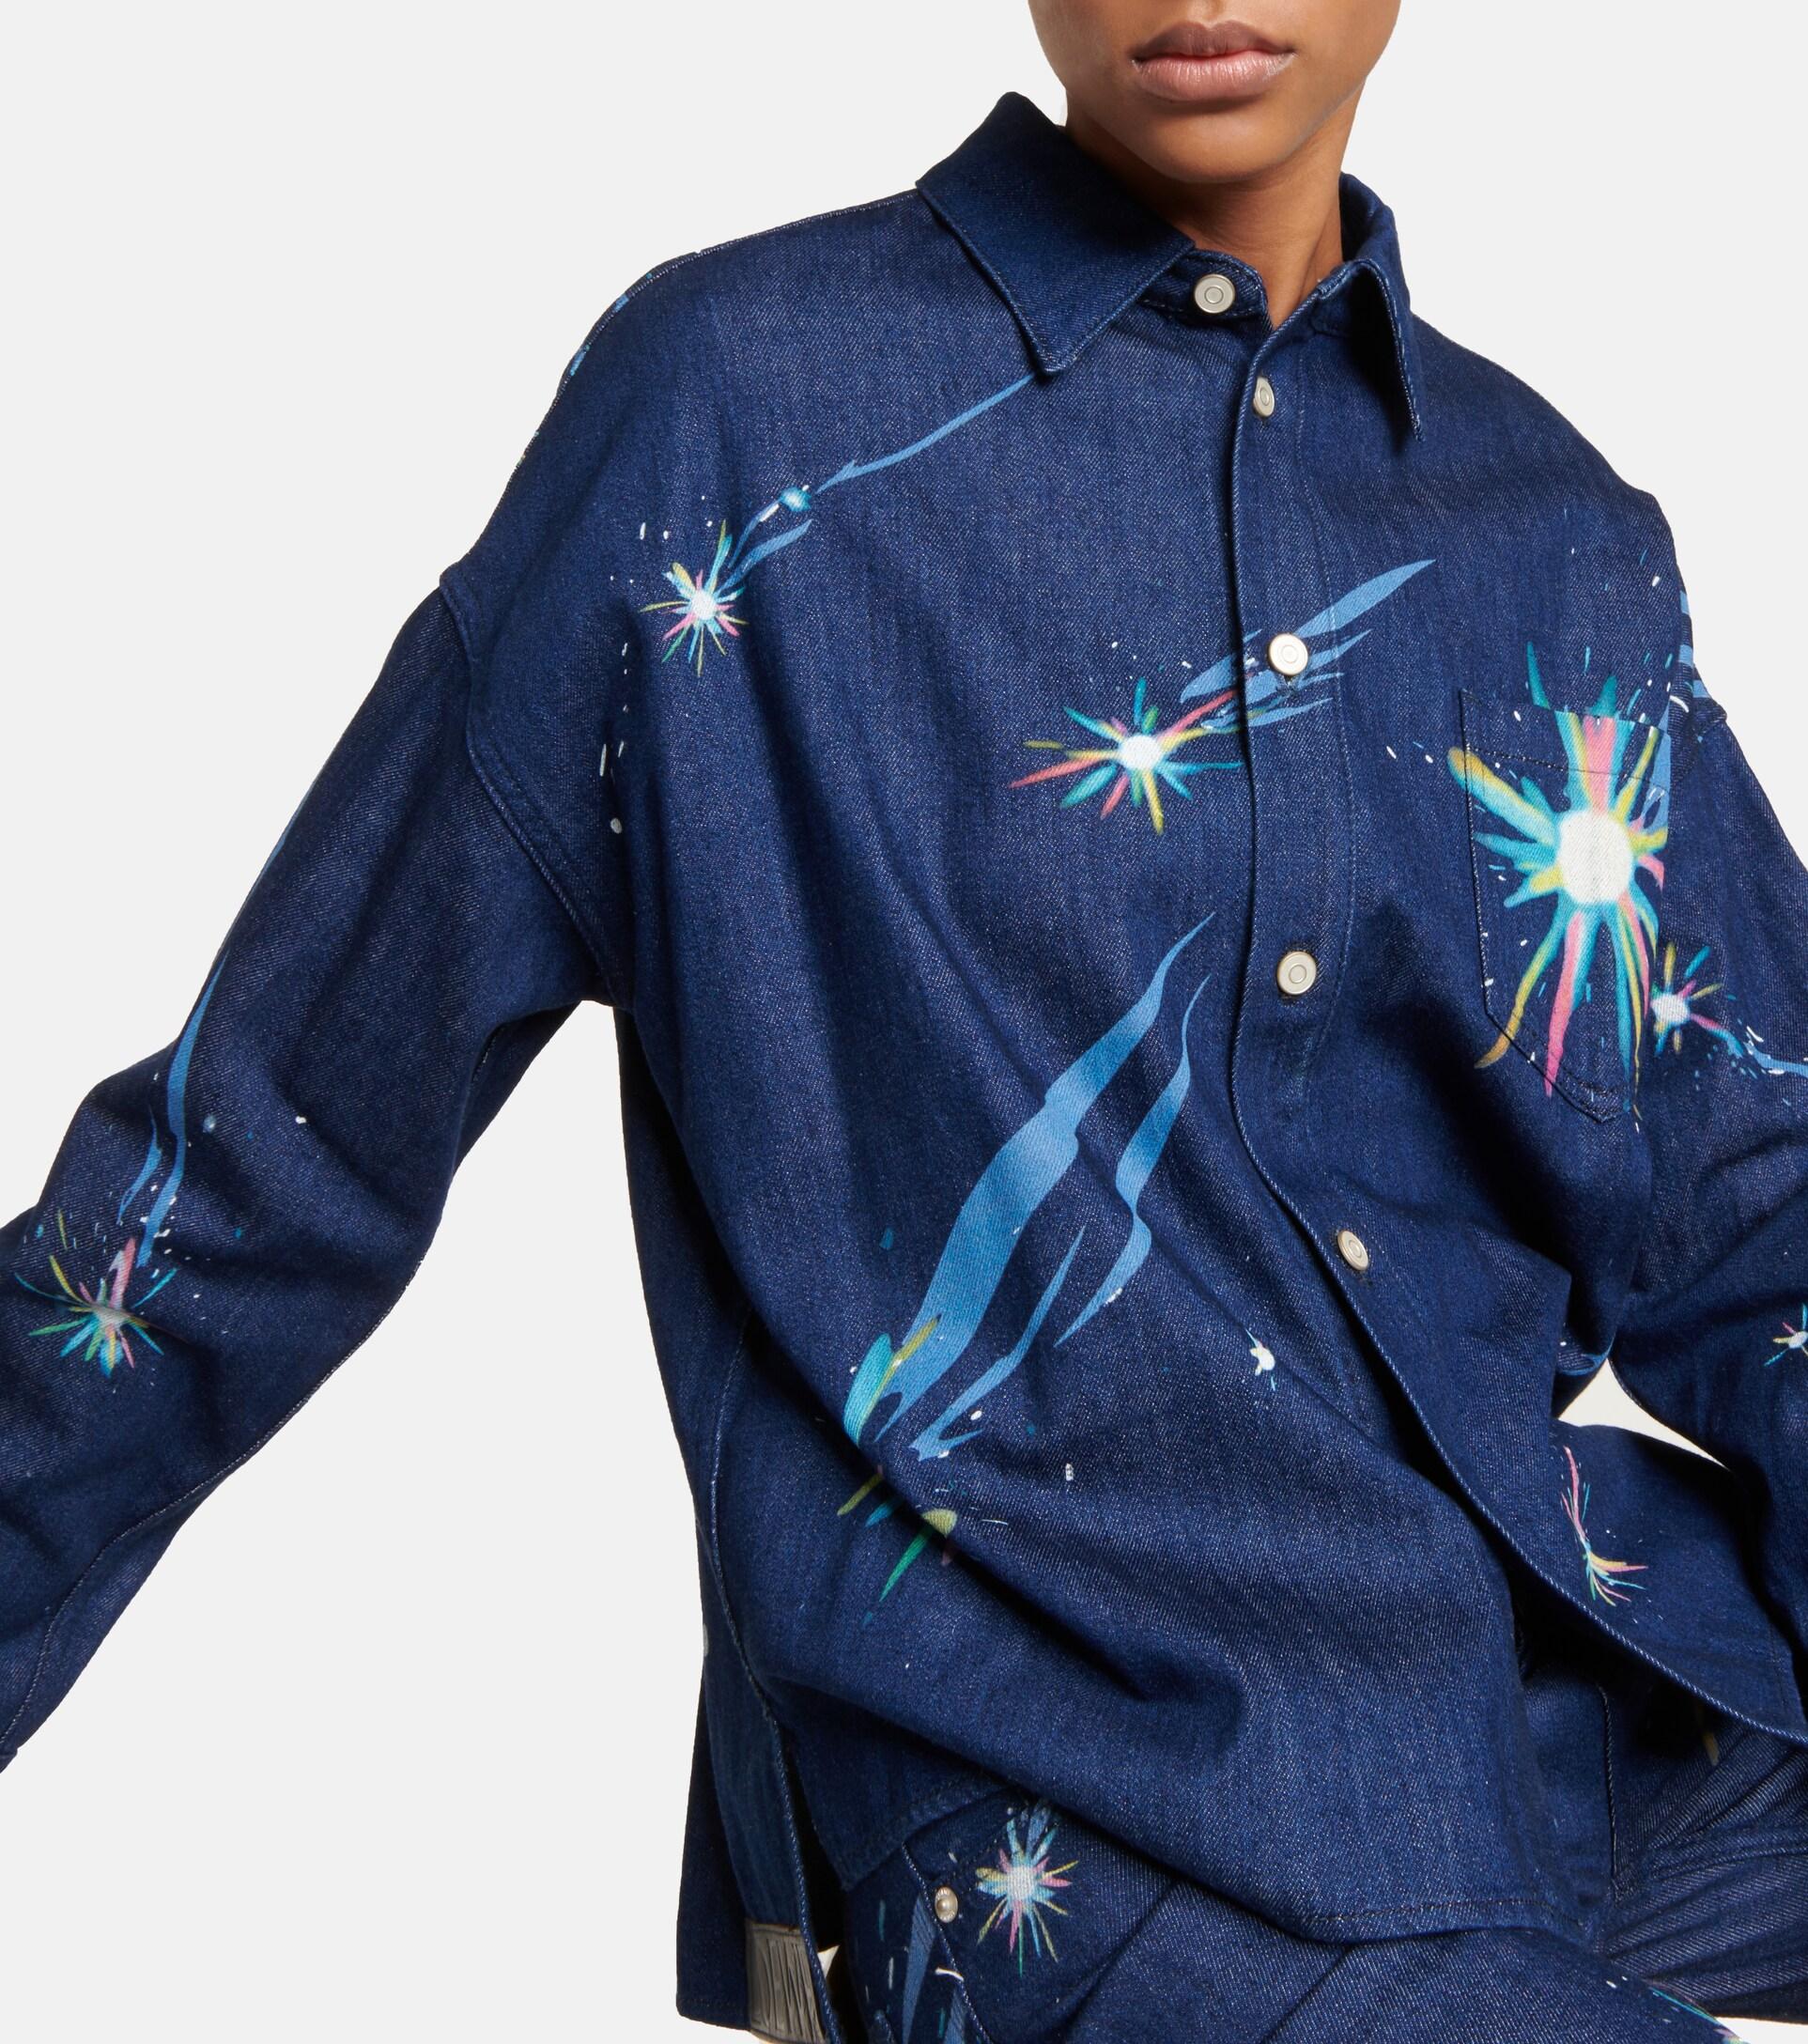 Loewe X Howl's Moving Castle Magical Sky Printed Denim Shirt Jacket in Blue